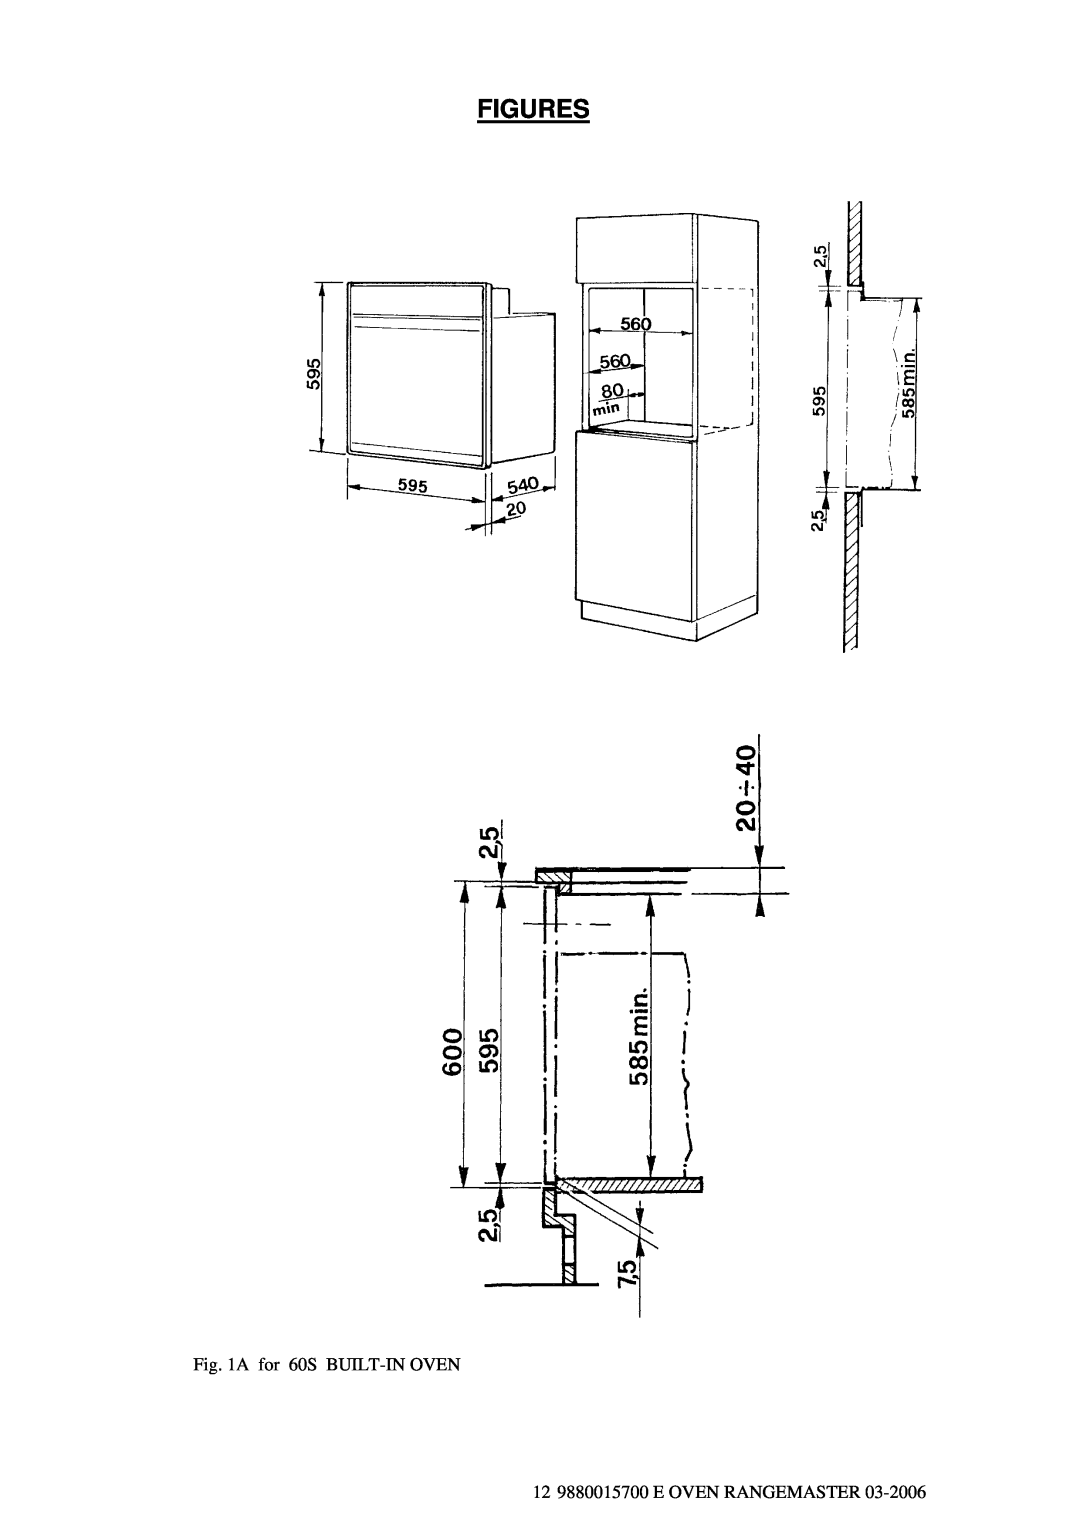 Rangemaster manual Figures, A for 60S BUILT-INOVEN, 12 9880015700 E OVEN RANGEMASTER 